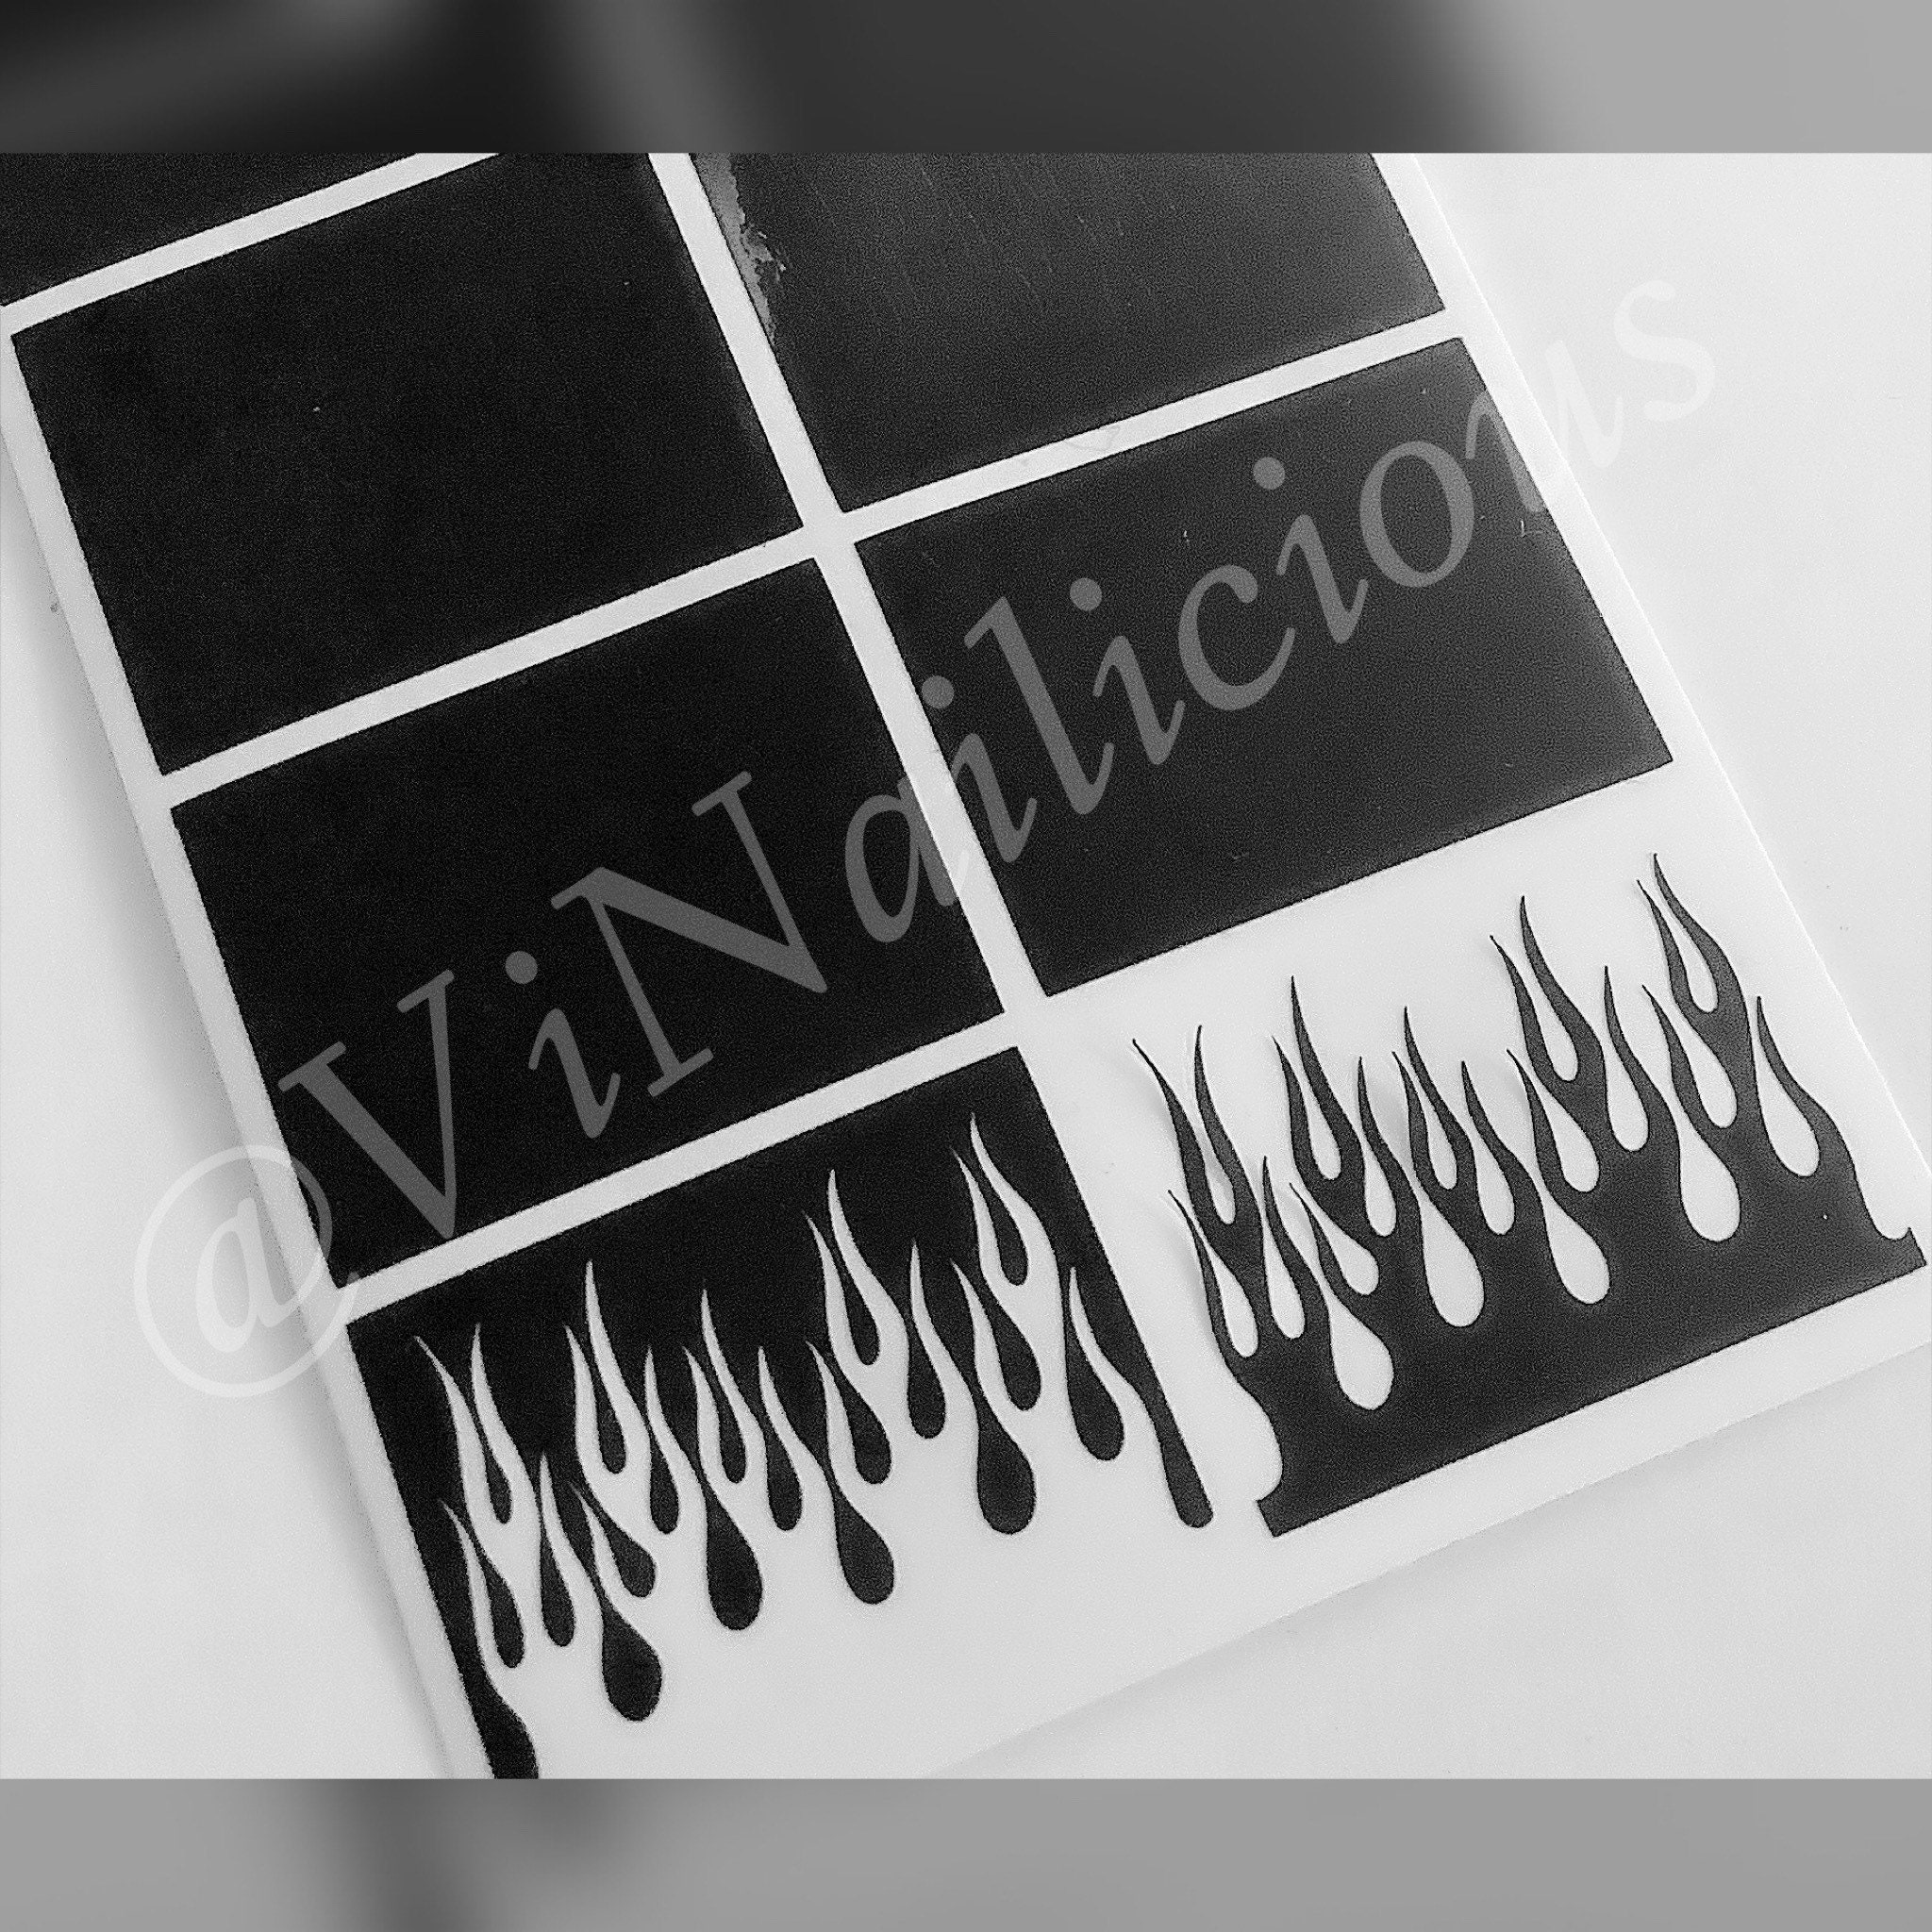 Flame Nail Airbrush Stencil Vinyl for Airbrush Trendy Y2k Nail Art Supplies